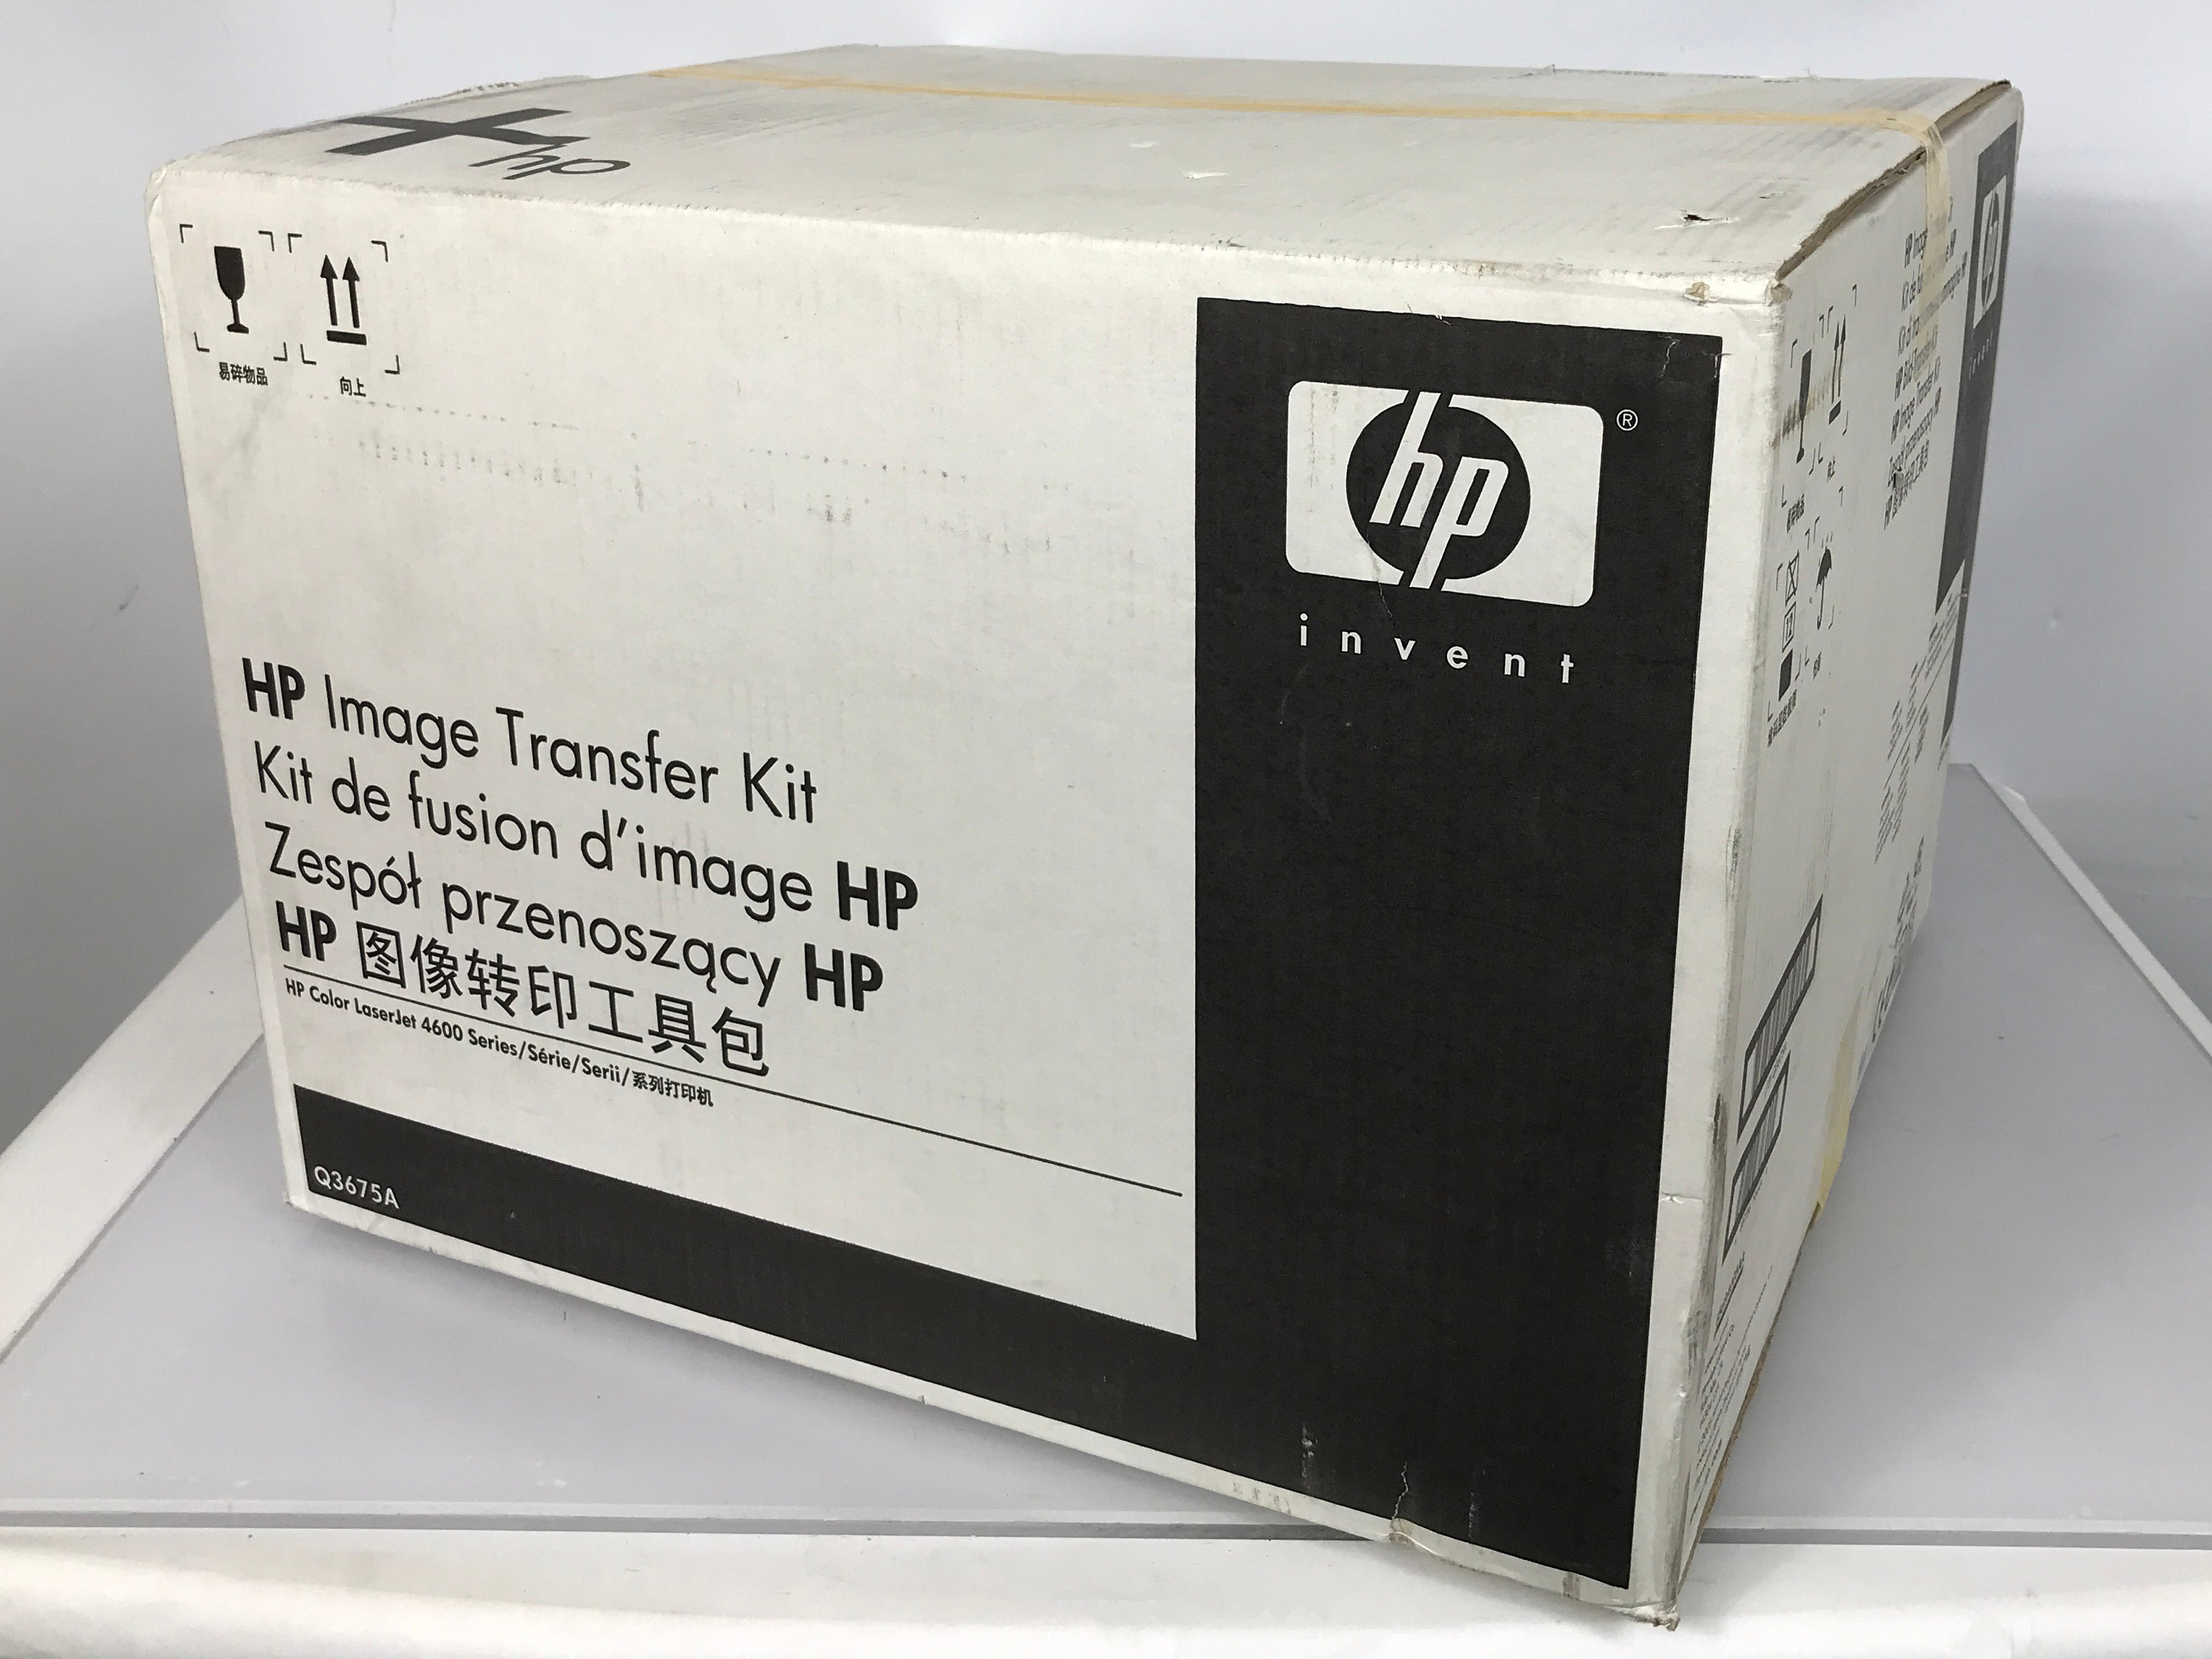 HP Q3675A Image Transfer Kit